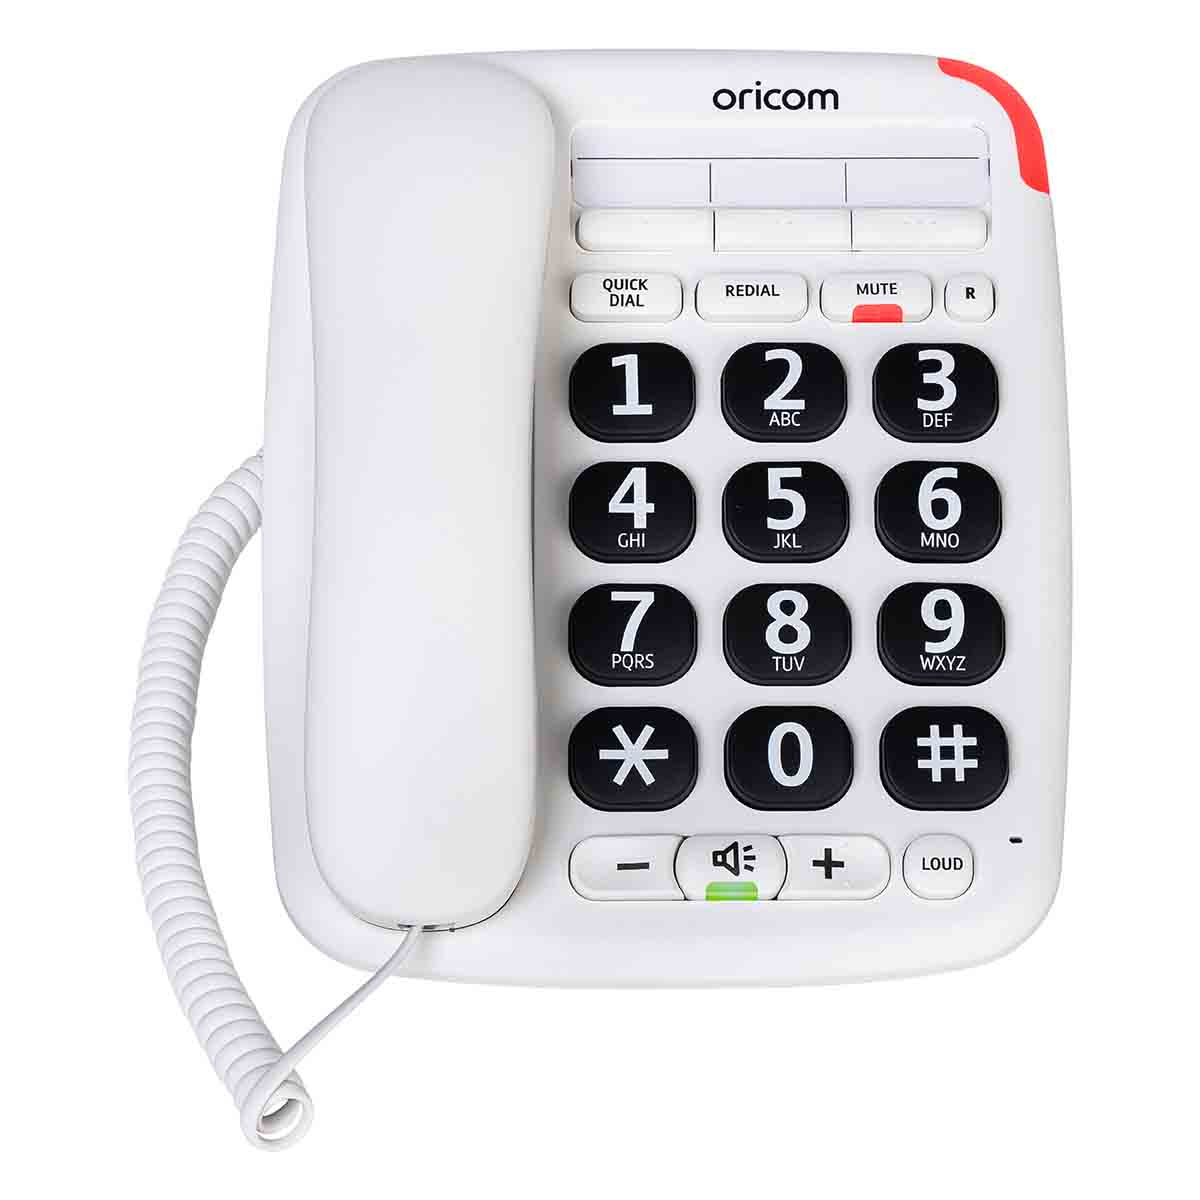 Oricom CARE95 Amplified Big Button Phone with Handsfree Speakerphone